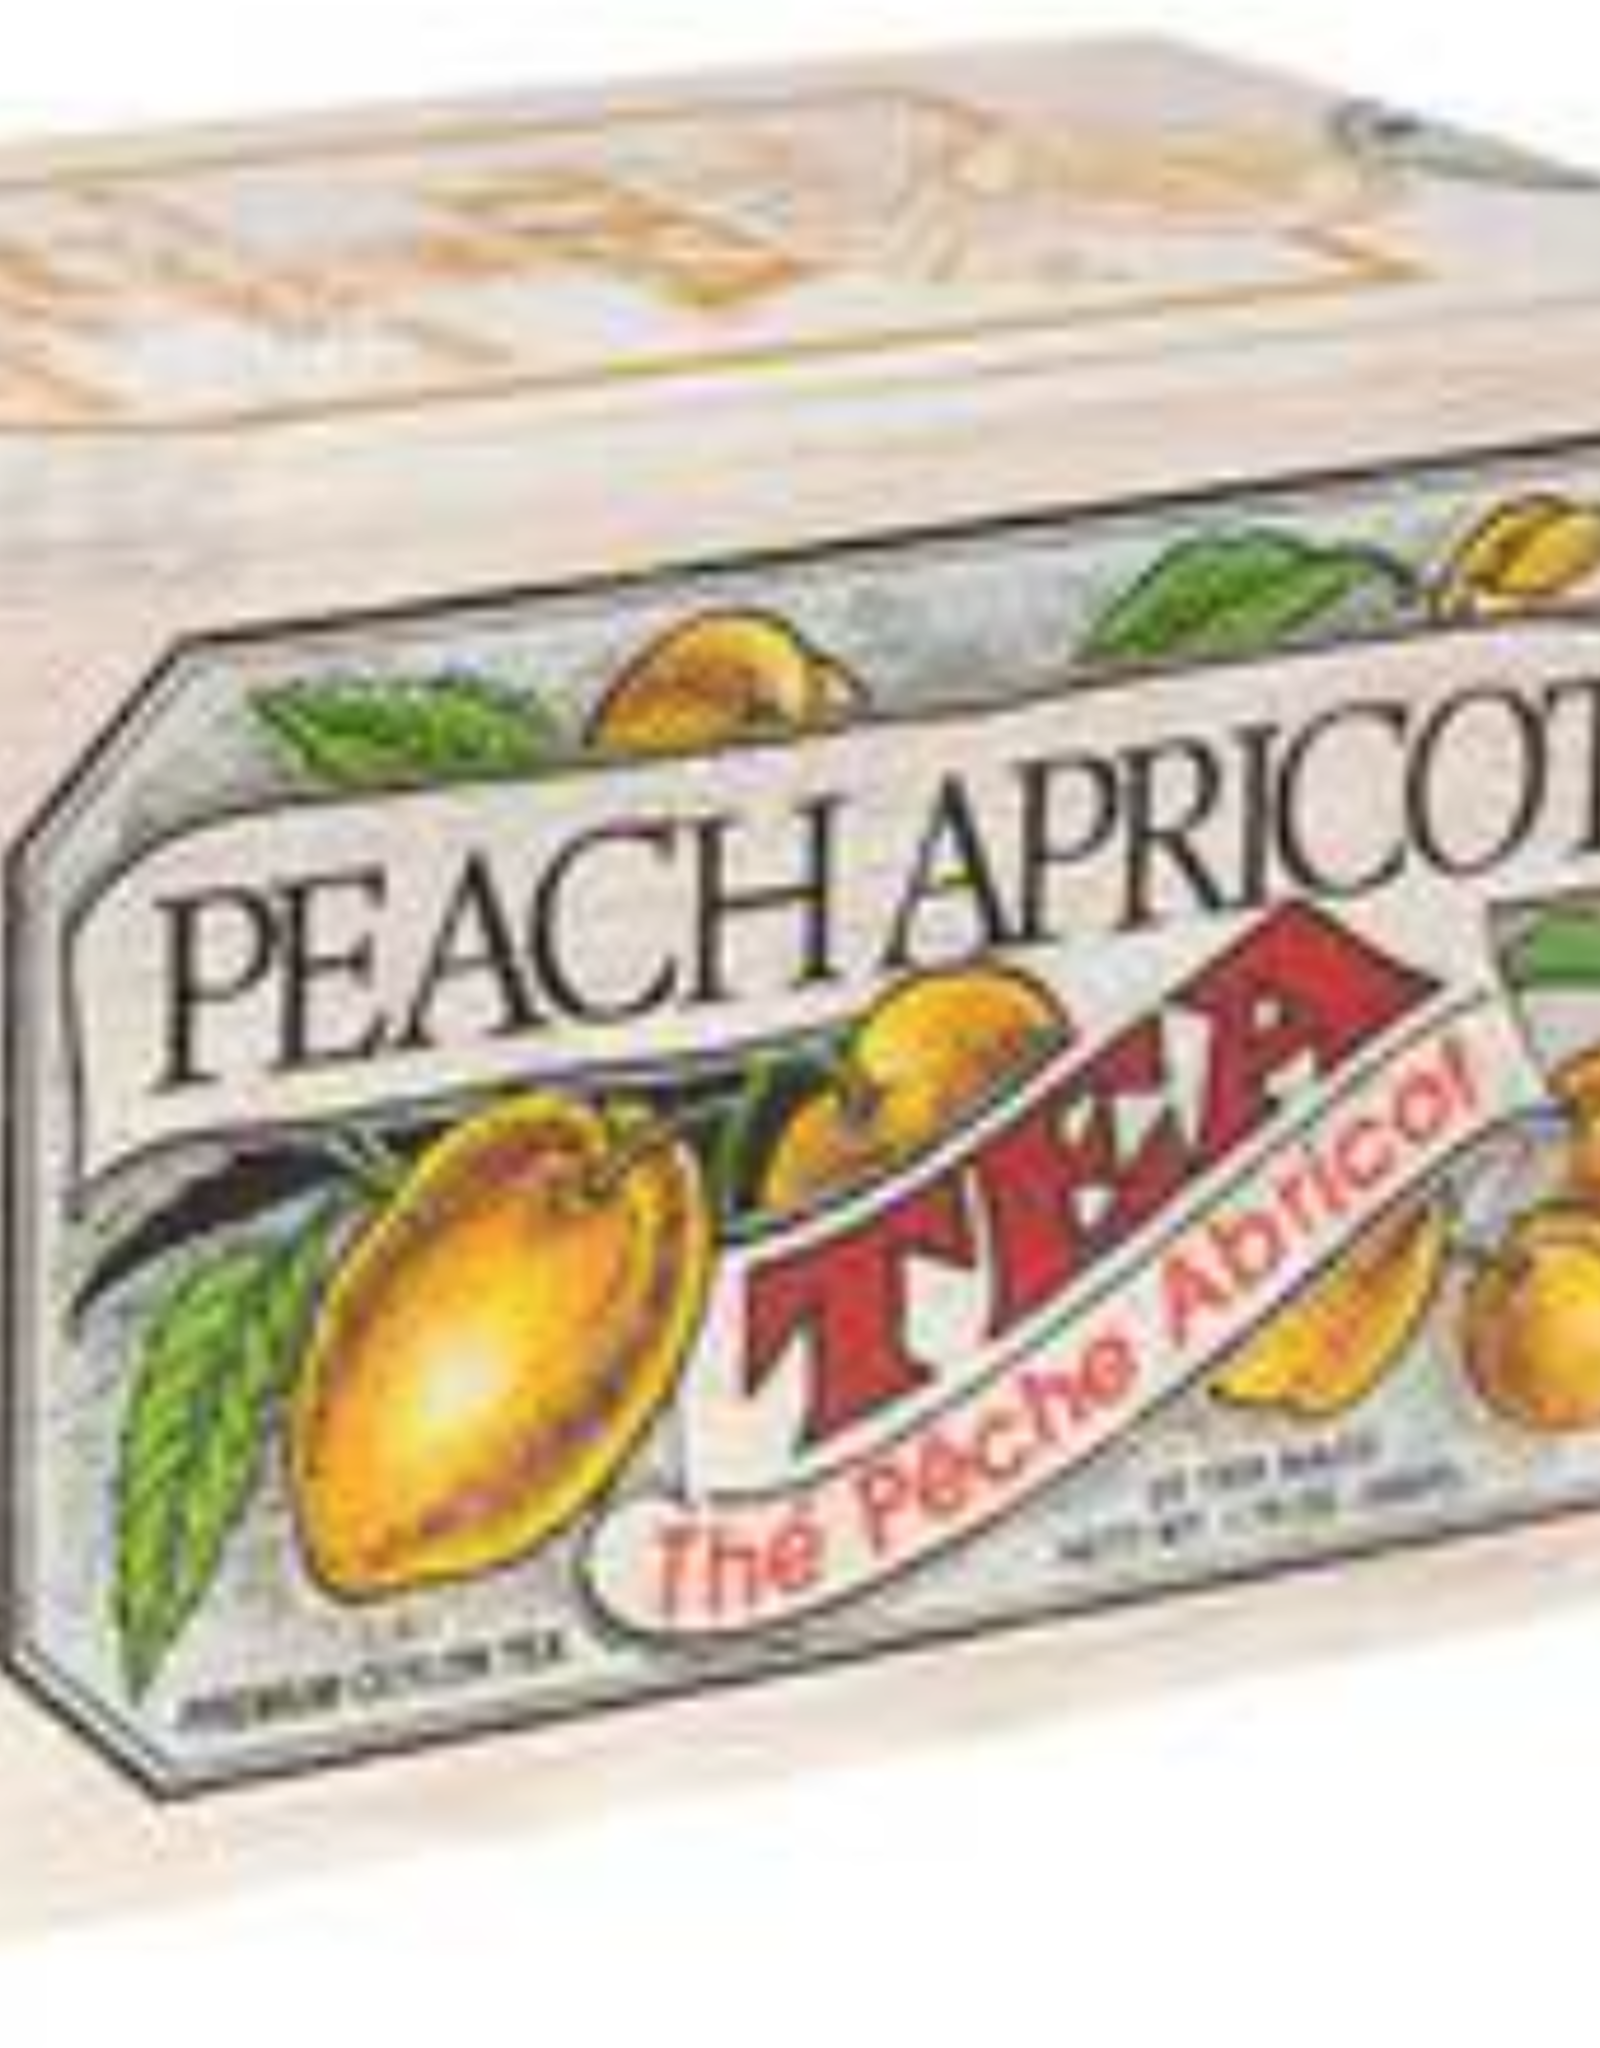 Food & Beverage Metropolitan - Peach Apricot Tea